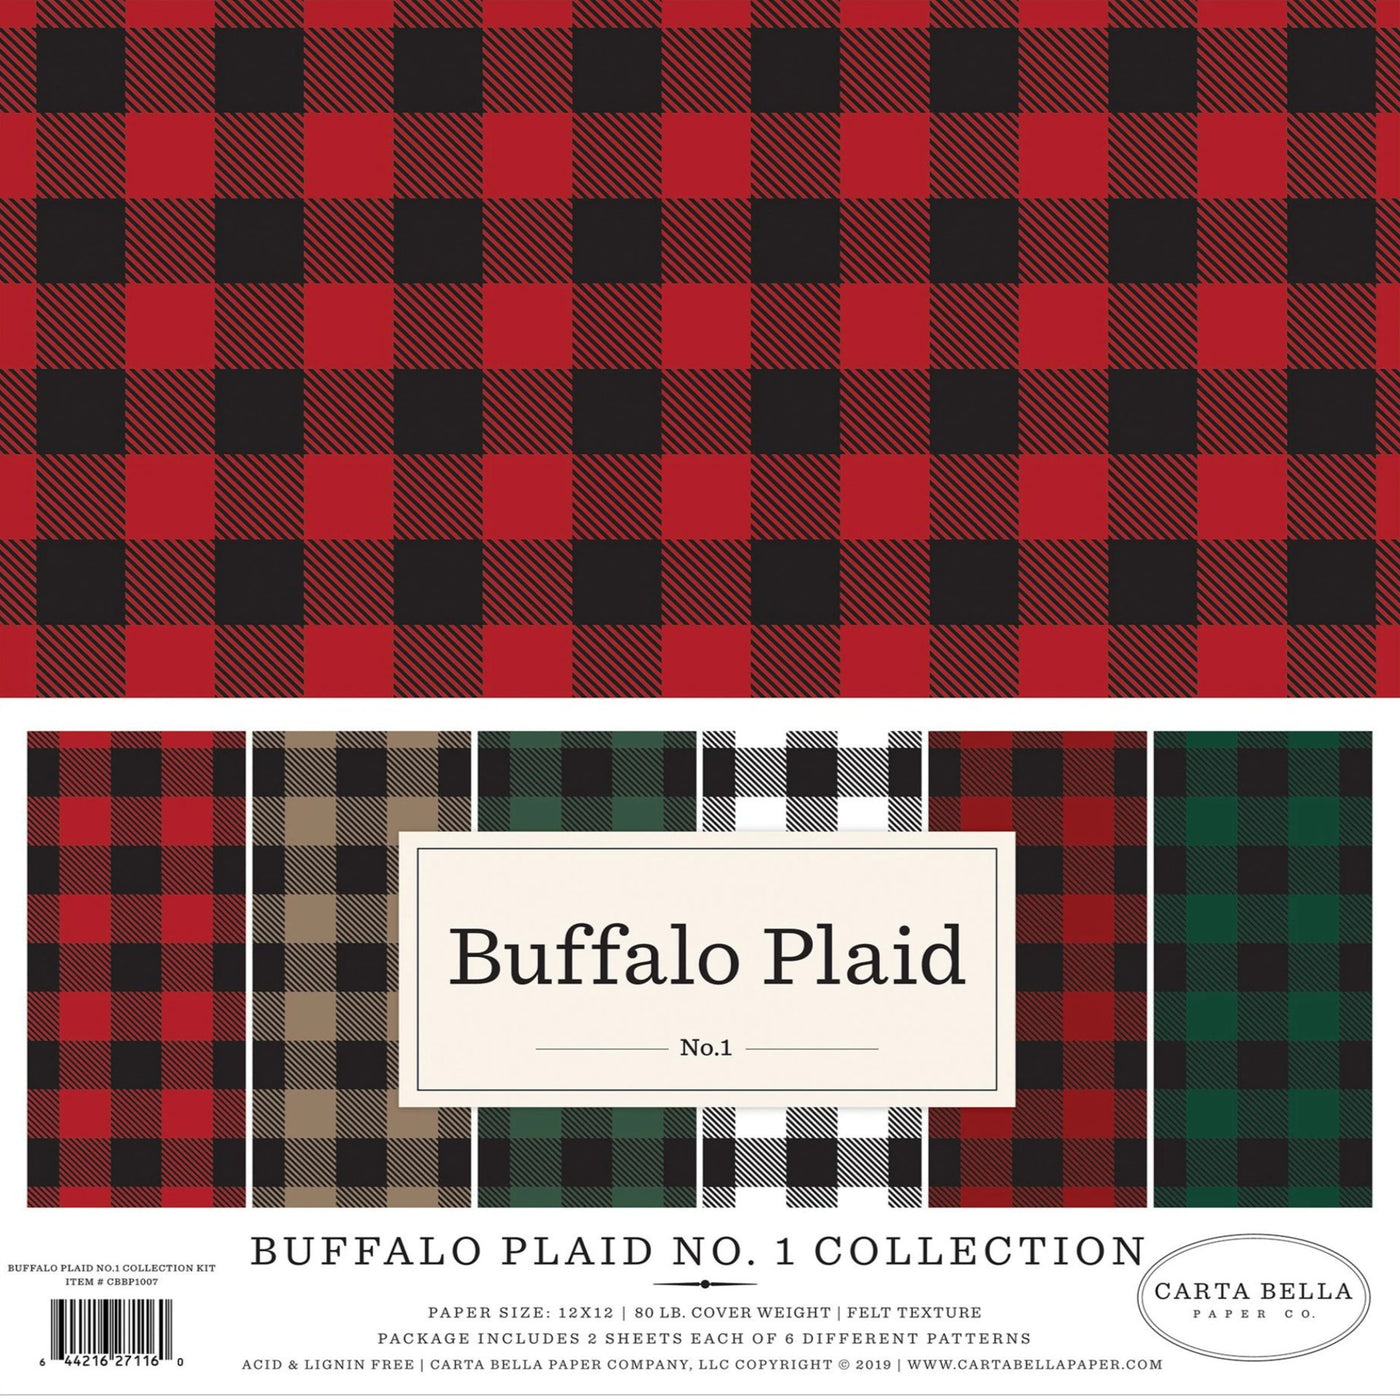 Buffalo Plaid No. 1 Collection of 12 double-sided buffalo plaid colors